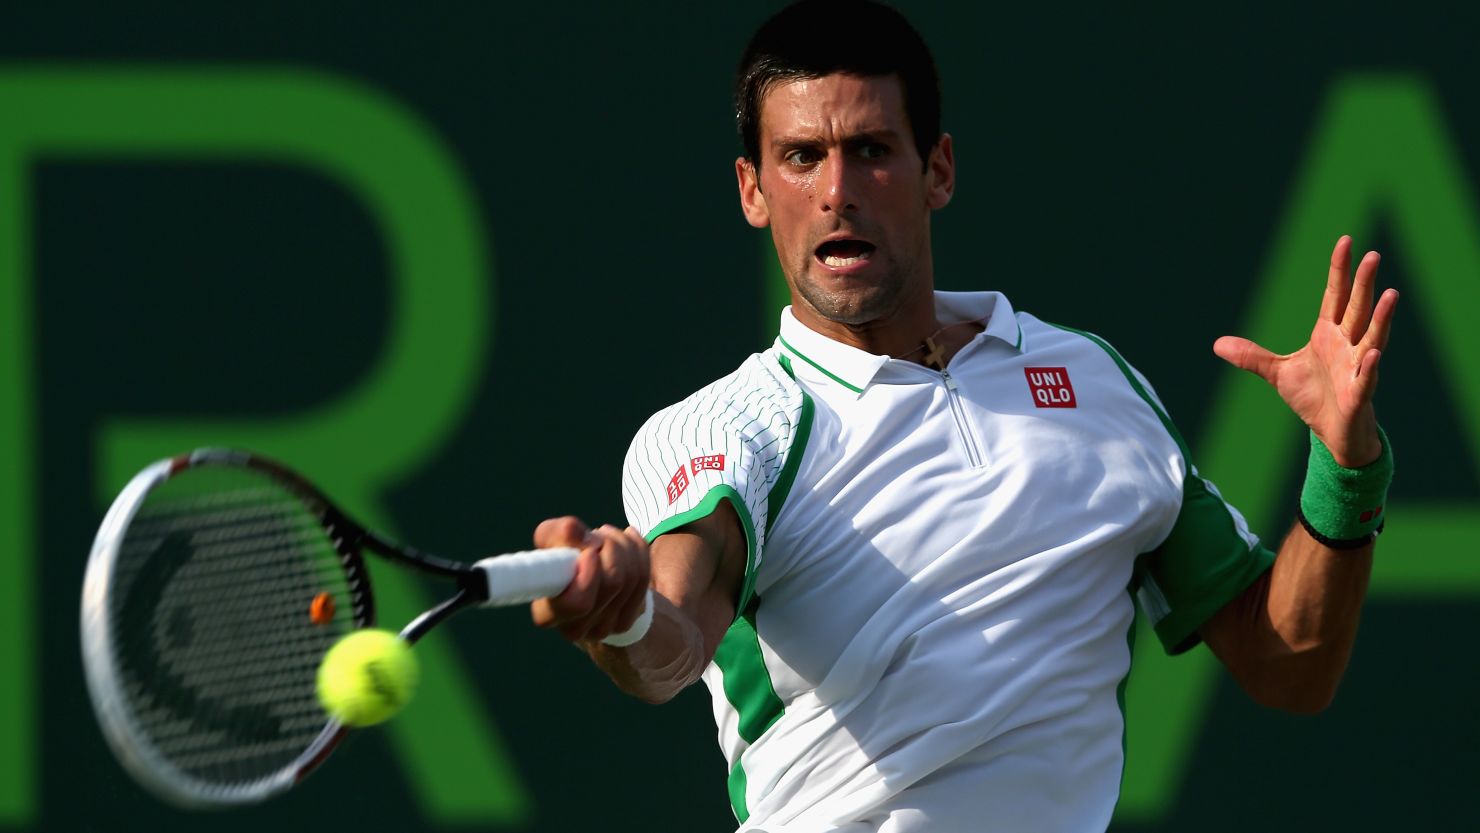 Serbian tennis star Novak Djokovic has won the Miami title three times, including the last two years.